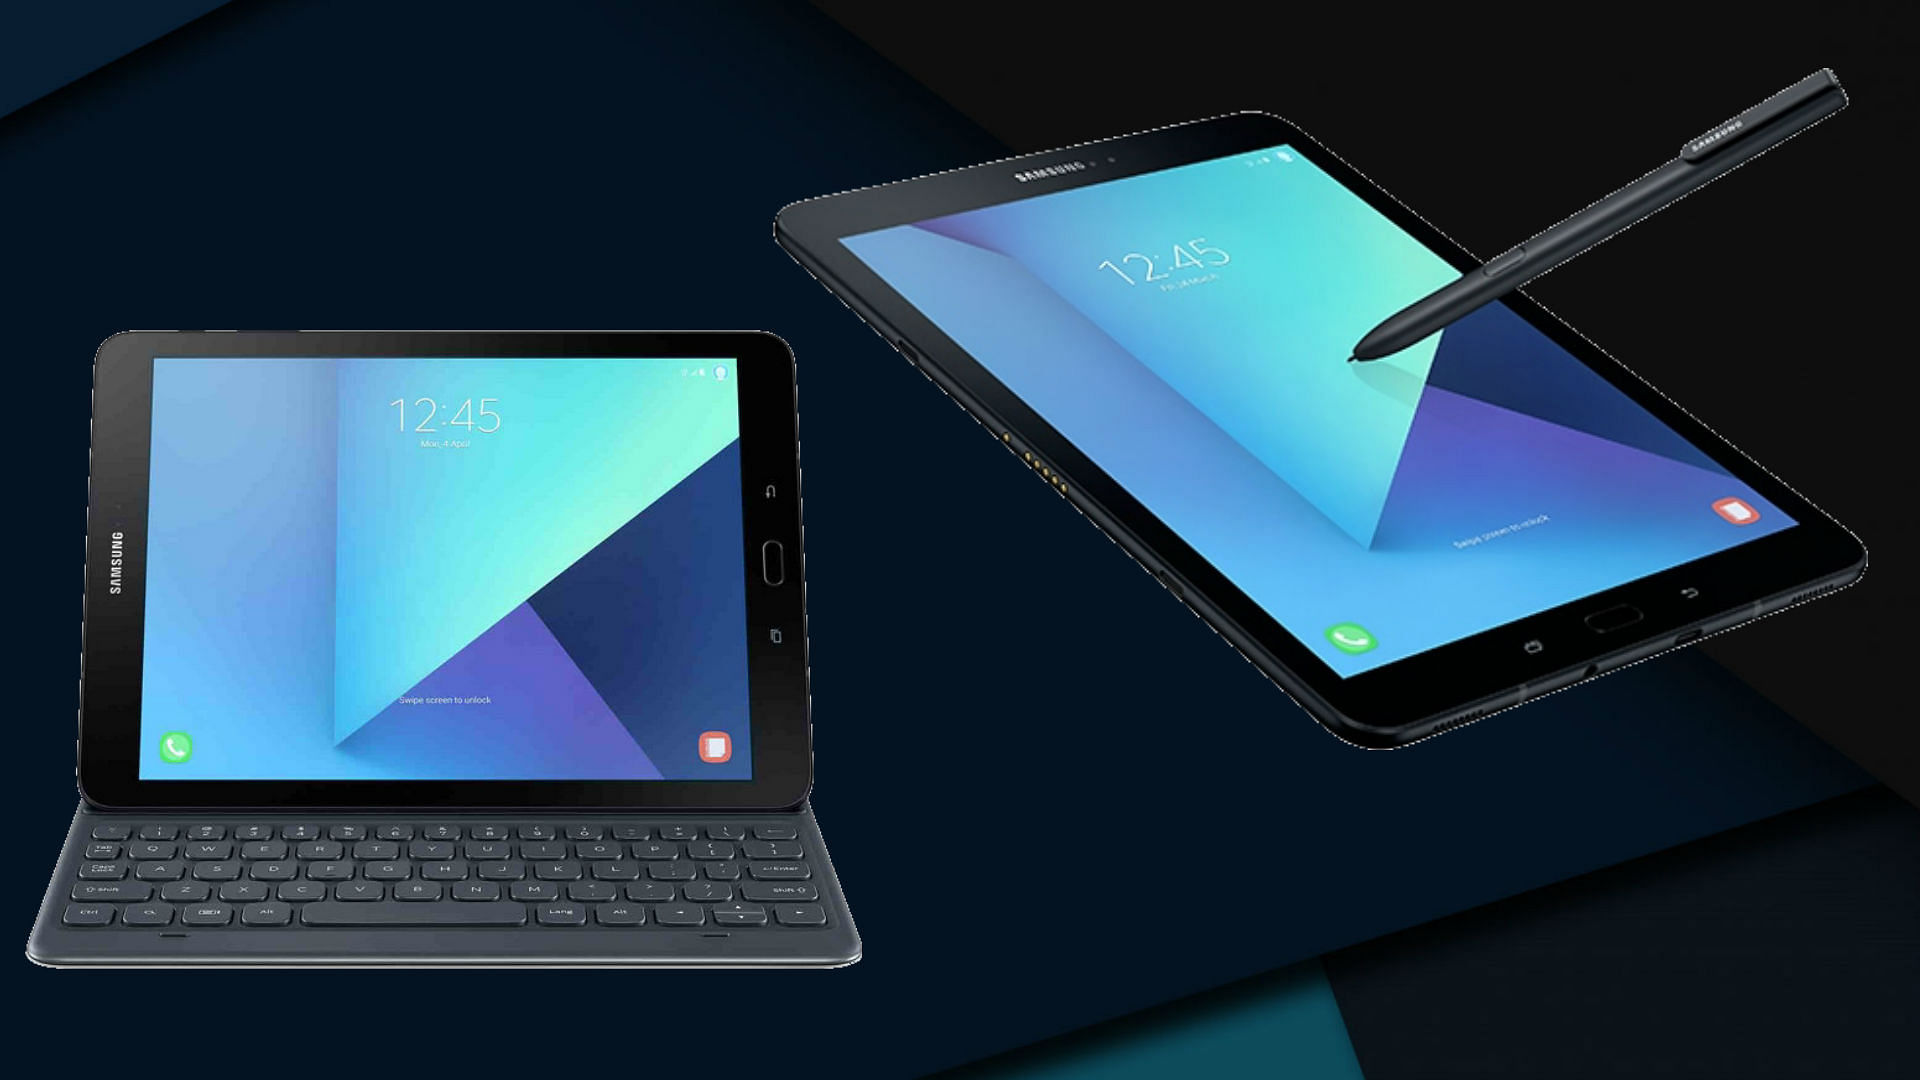 

Samsung Galaxy Tab S3 tablet-cum-laptop is here.